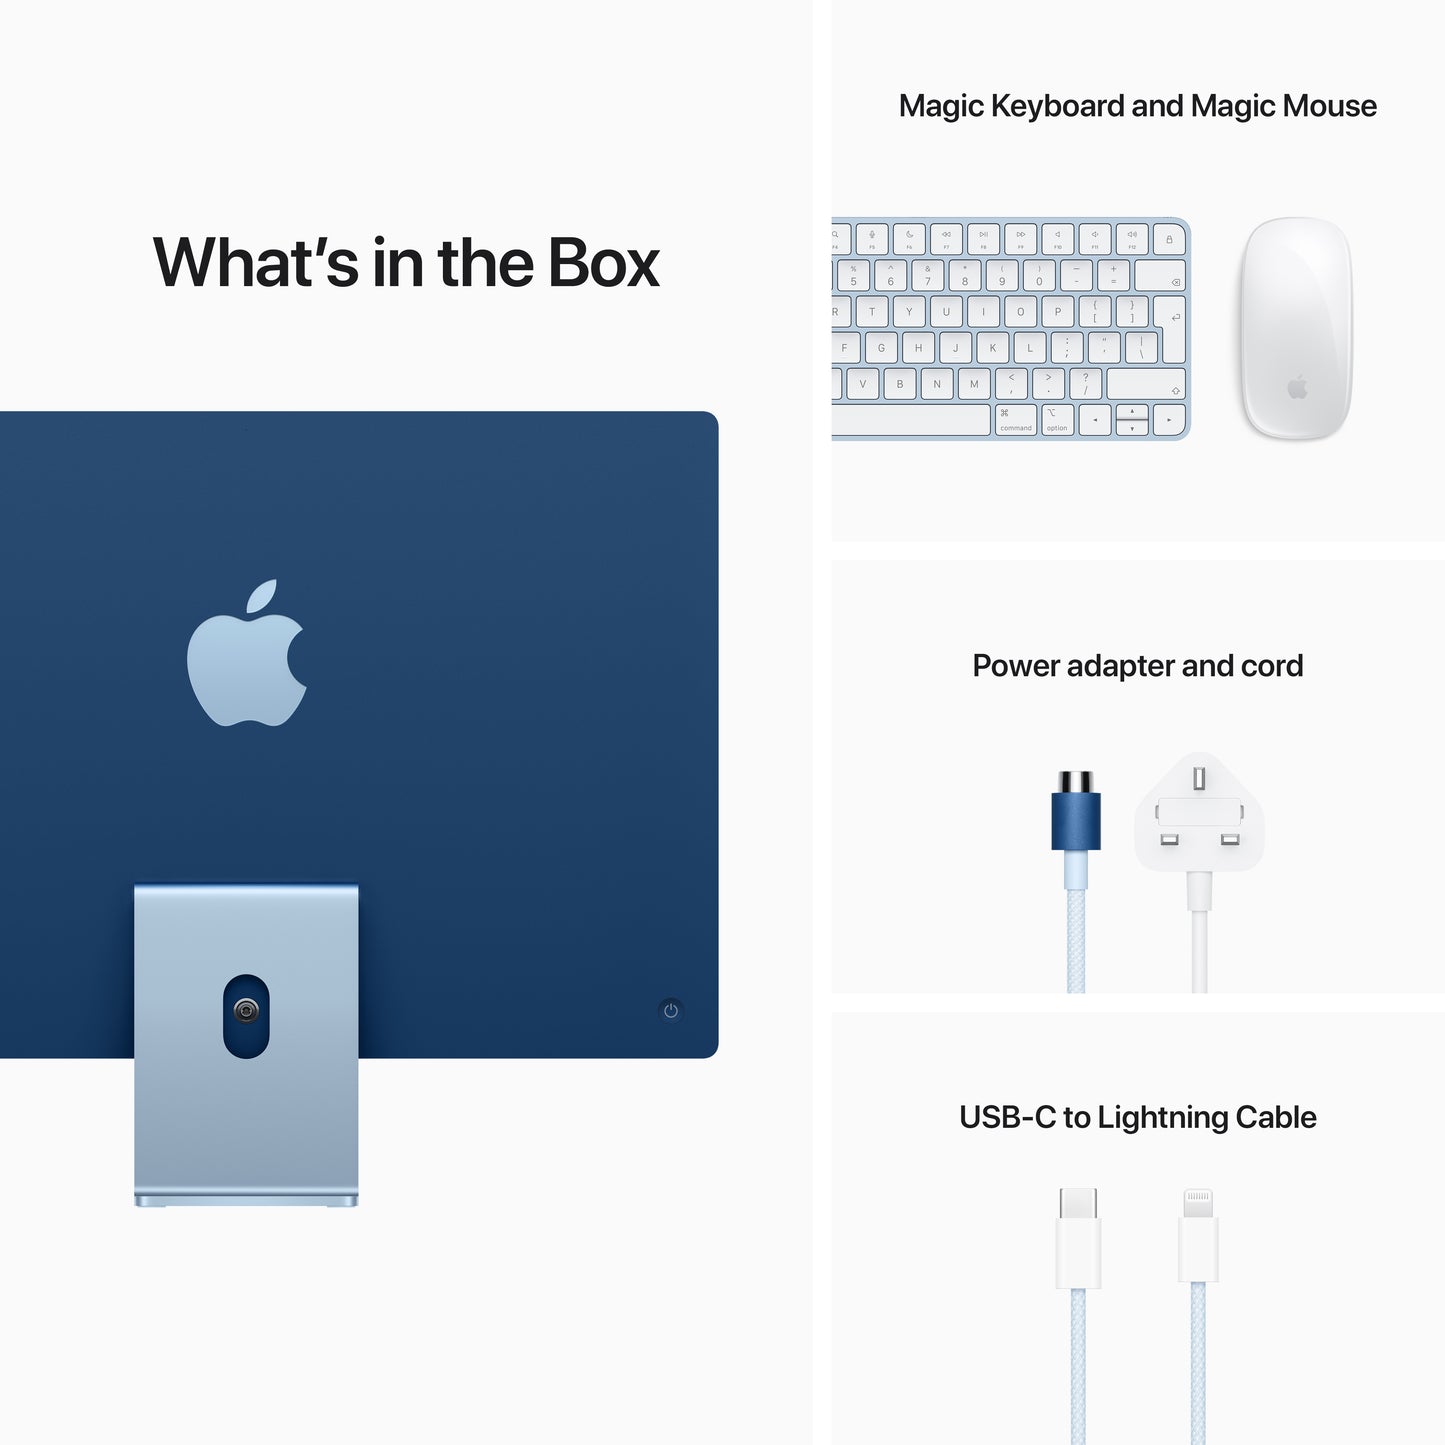 24-inch iMac with Retina 4.5K display: Apple M1 chip with 8_core CPU and 7_core GPU, 256GB - Blue